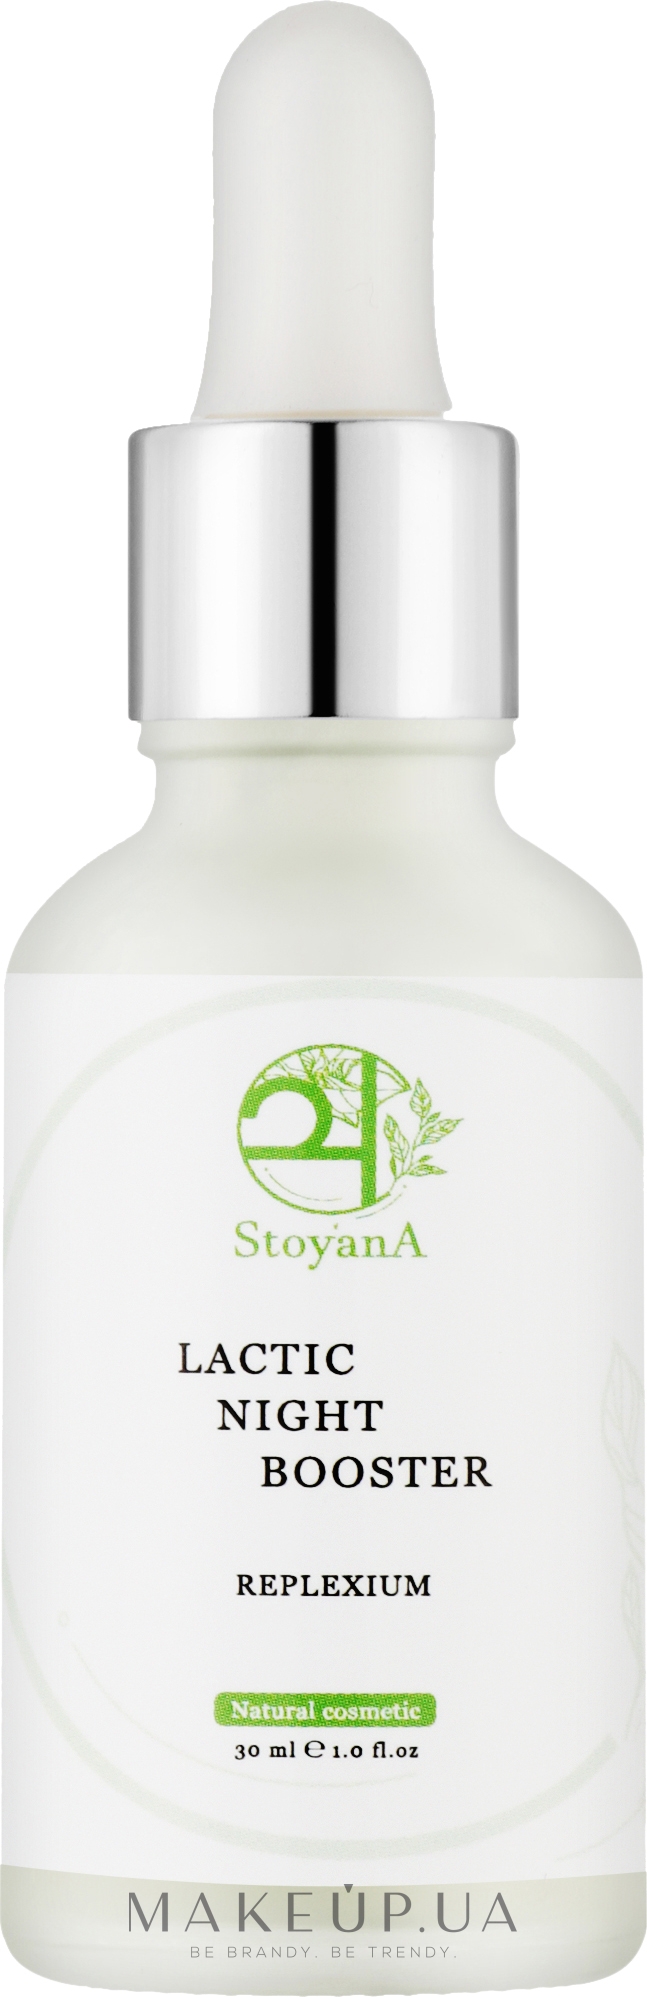 Увлажняющий молочный ночной бустер с пептидом для лица - StoyanA Lactic Night Booster Replexium — фото 30ml